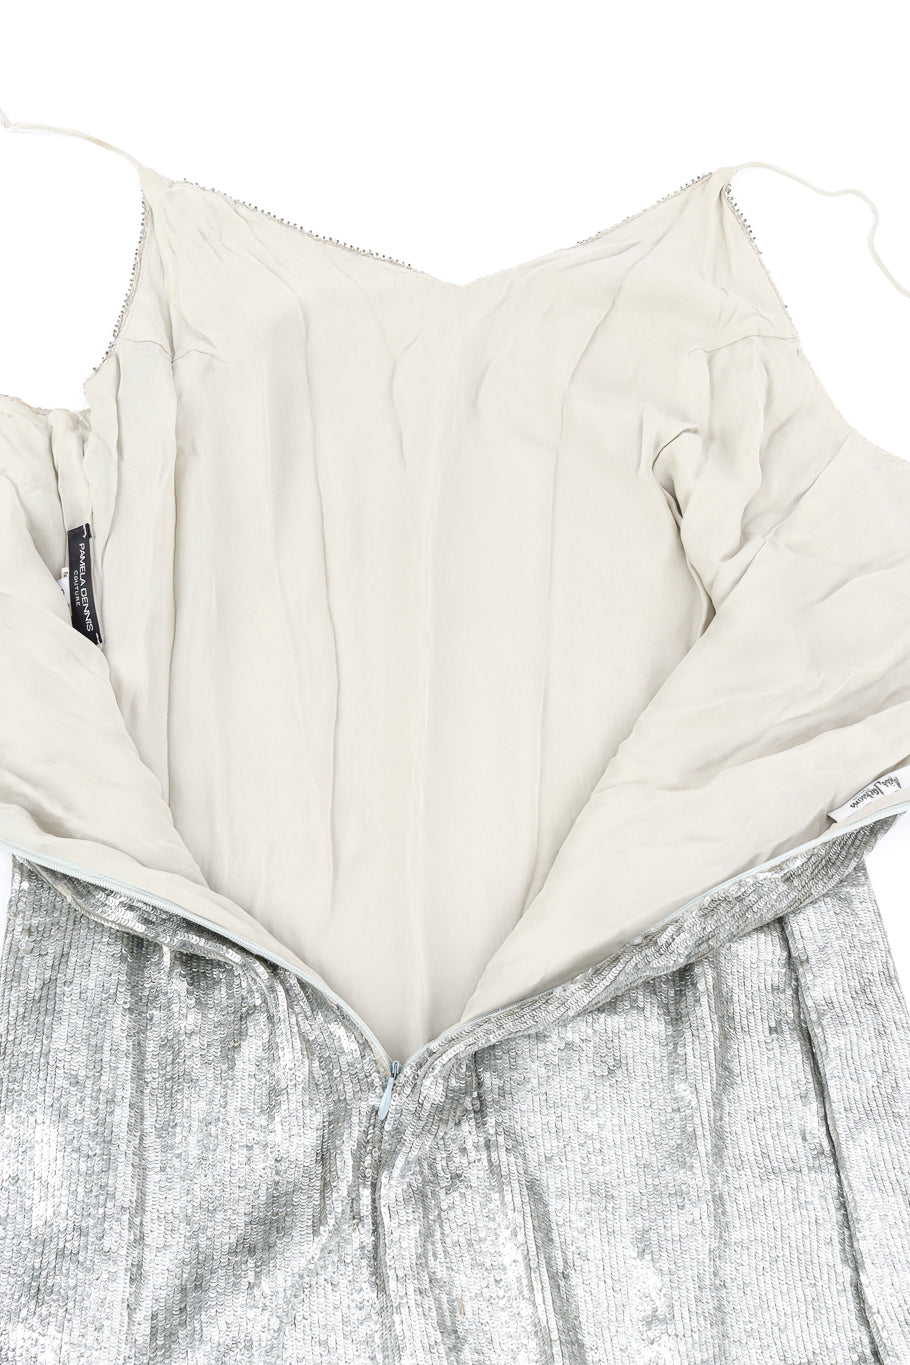 Vintage Pamela Dennis Strappy Metallic Sequin Dress back unzipped @recess la